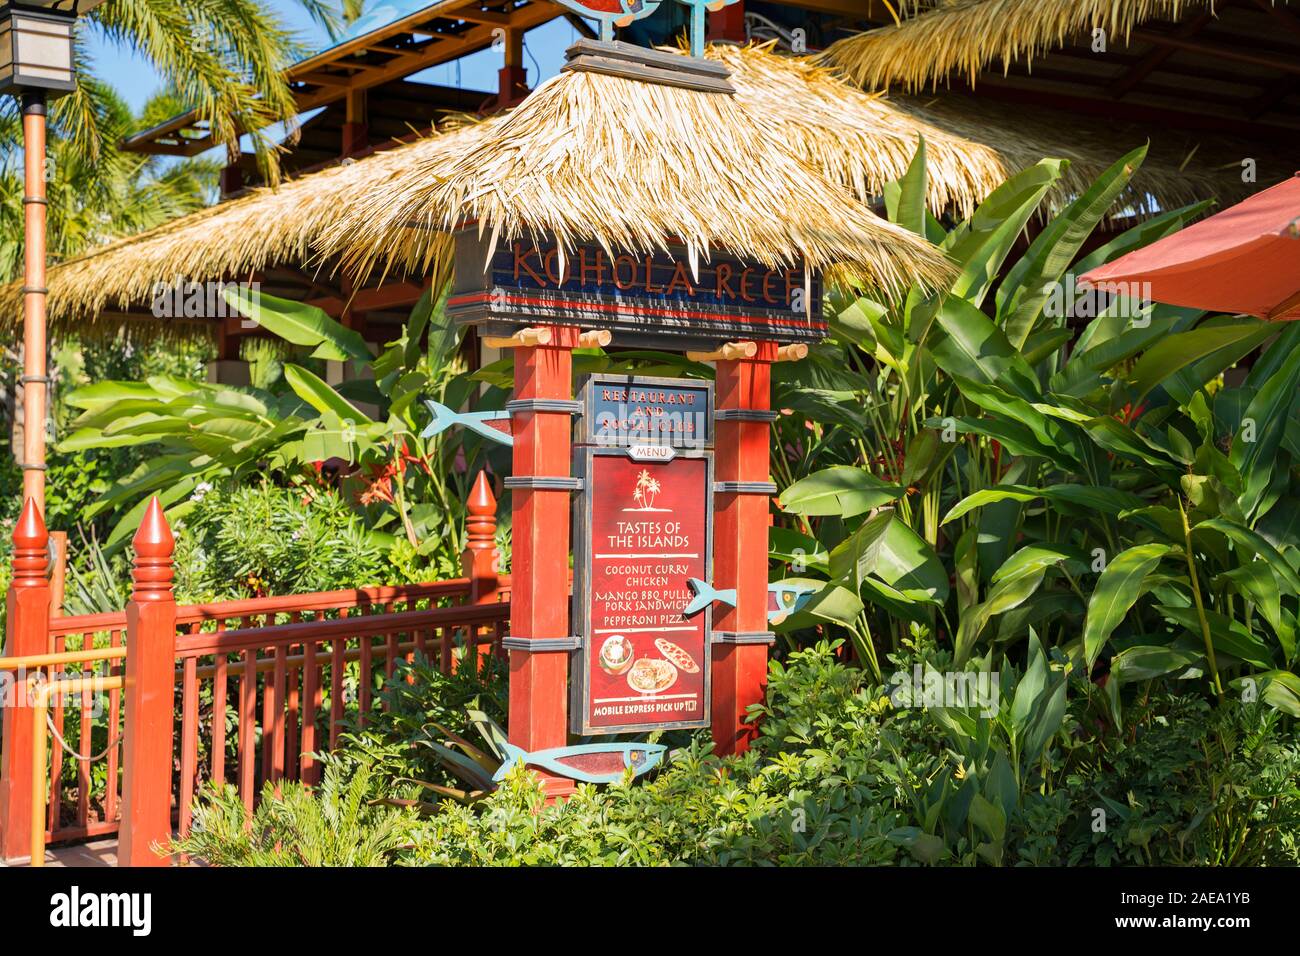 Kohola Reef Restaurant and Social Club at Volcano Bay, Universal Orlando Resort, Florida, USA Stock Photo